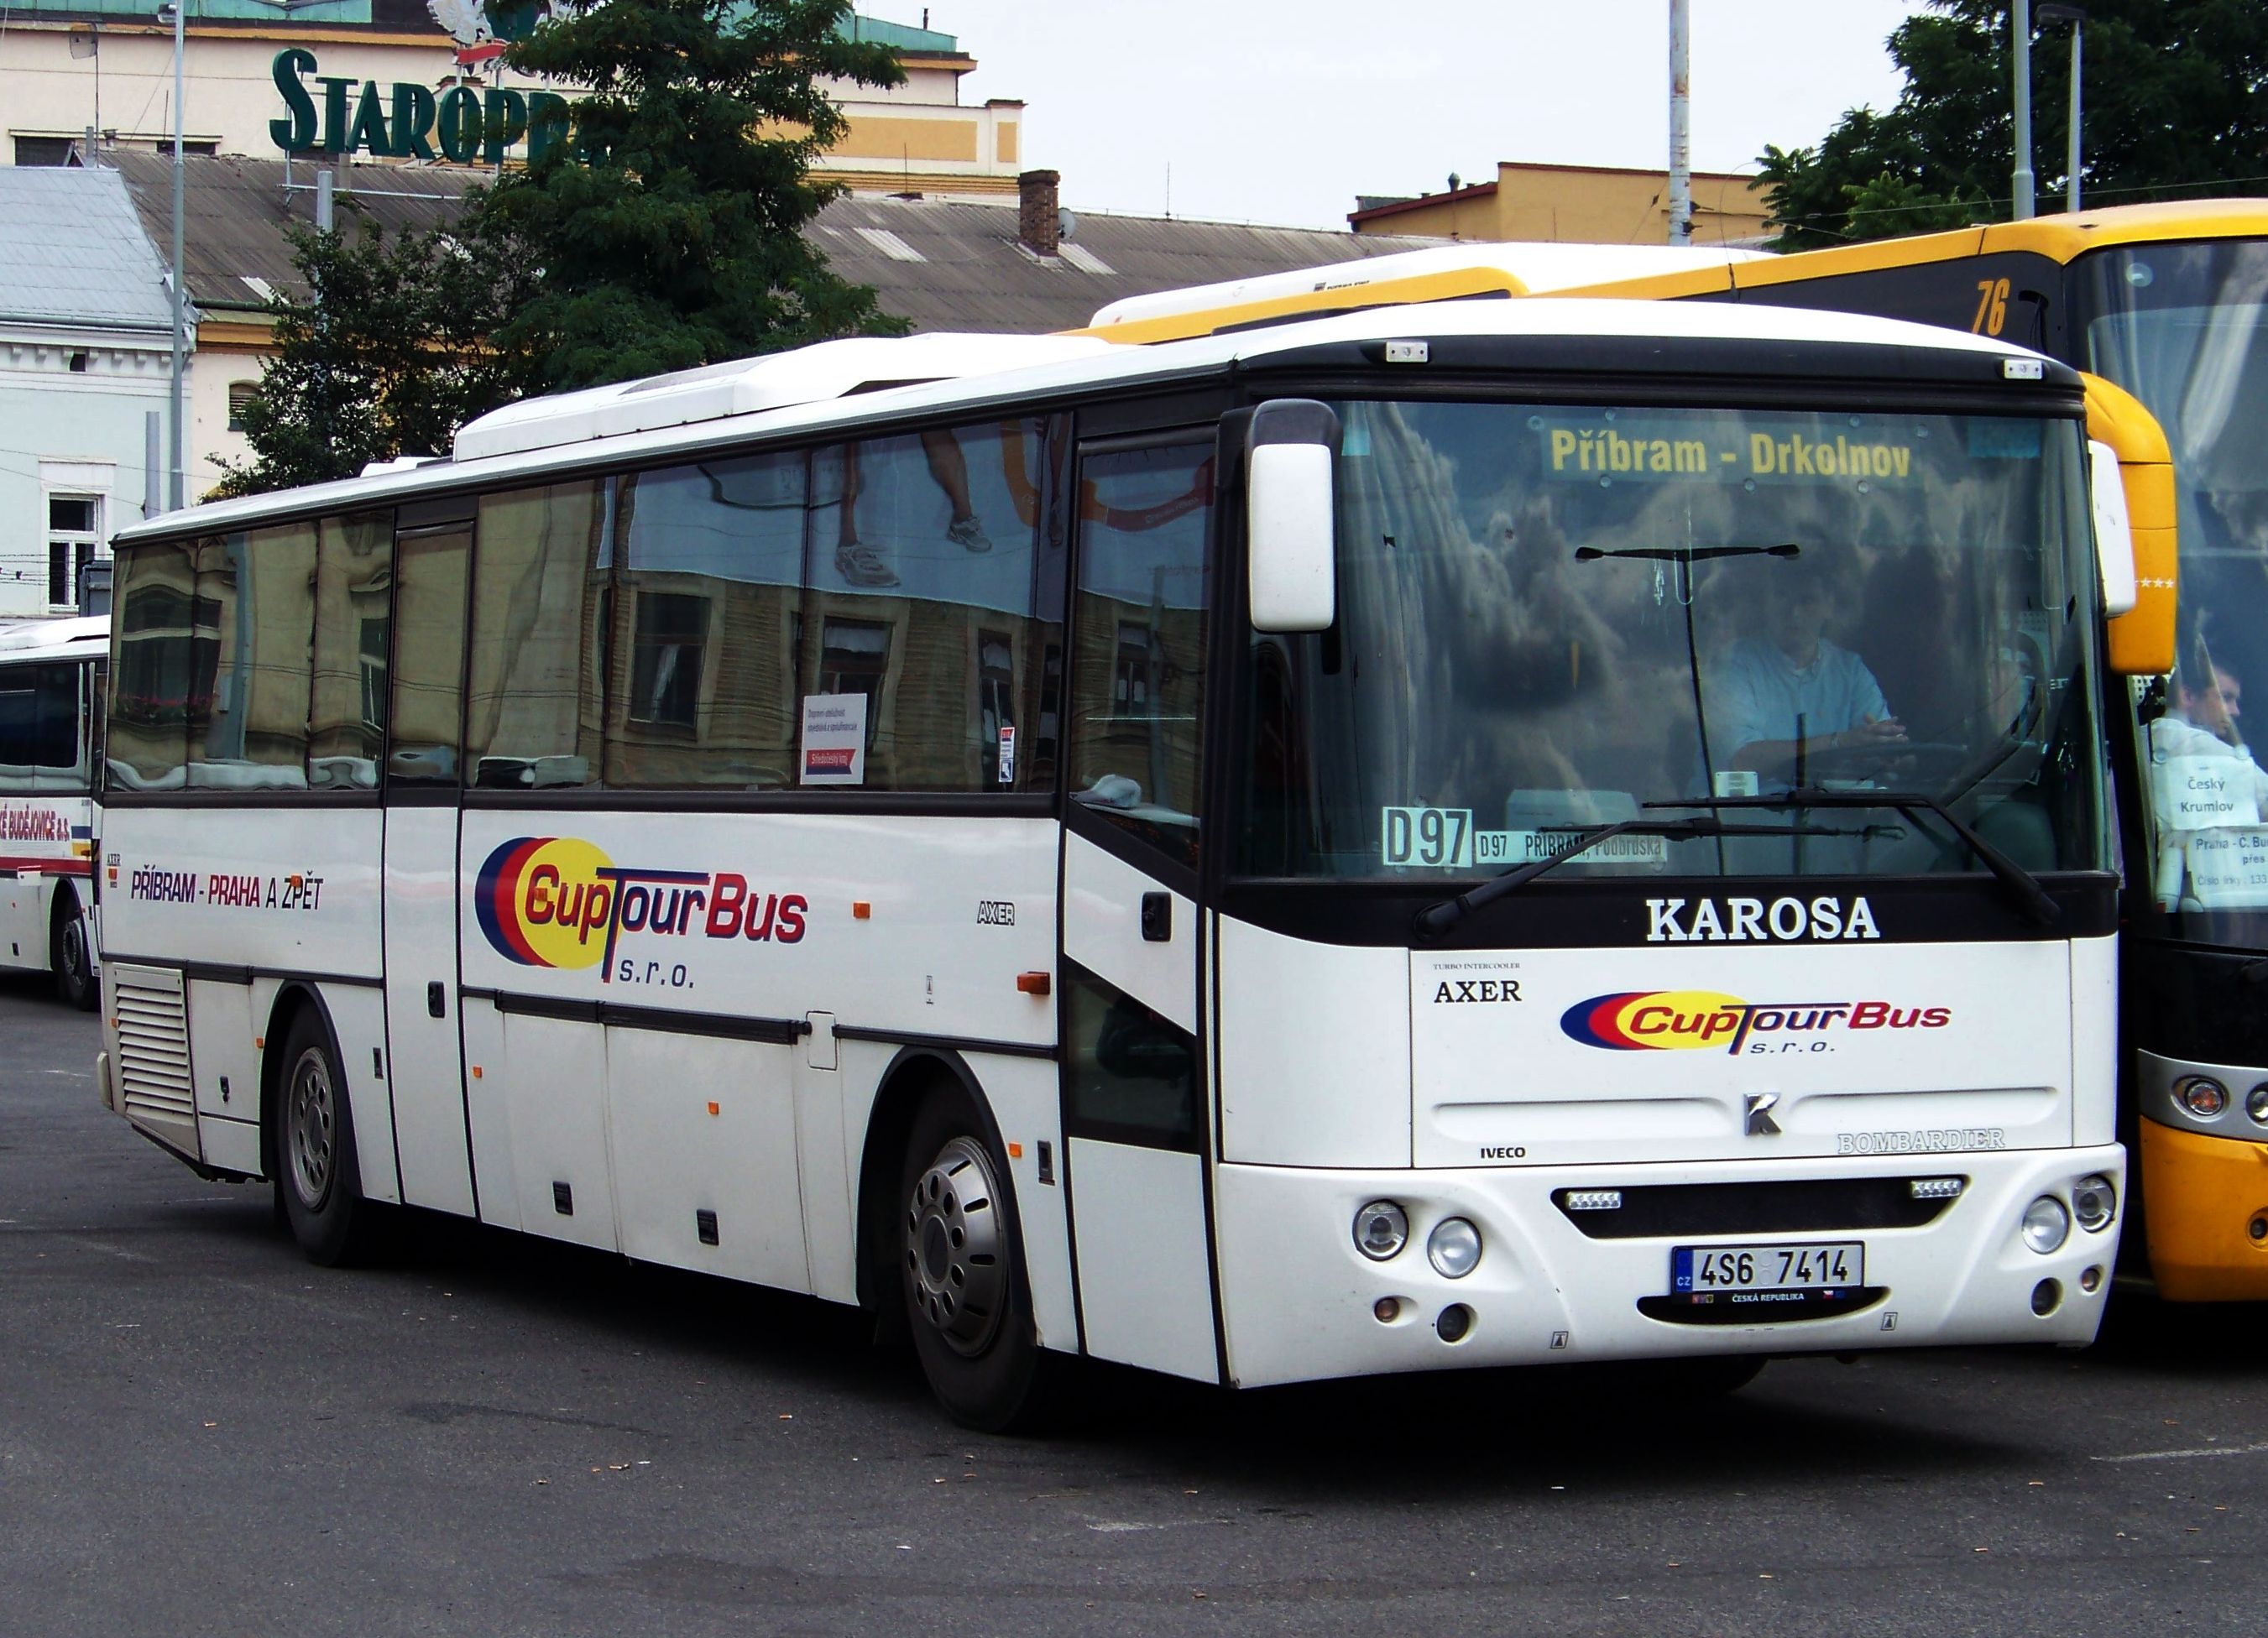 File:Karosa Axer - Cup Tour Bus, Na KnÃ­Å¾ecÃ­.jpg - Wikimedia Commons